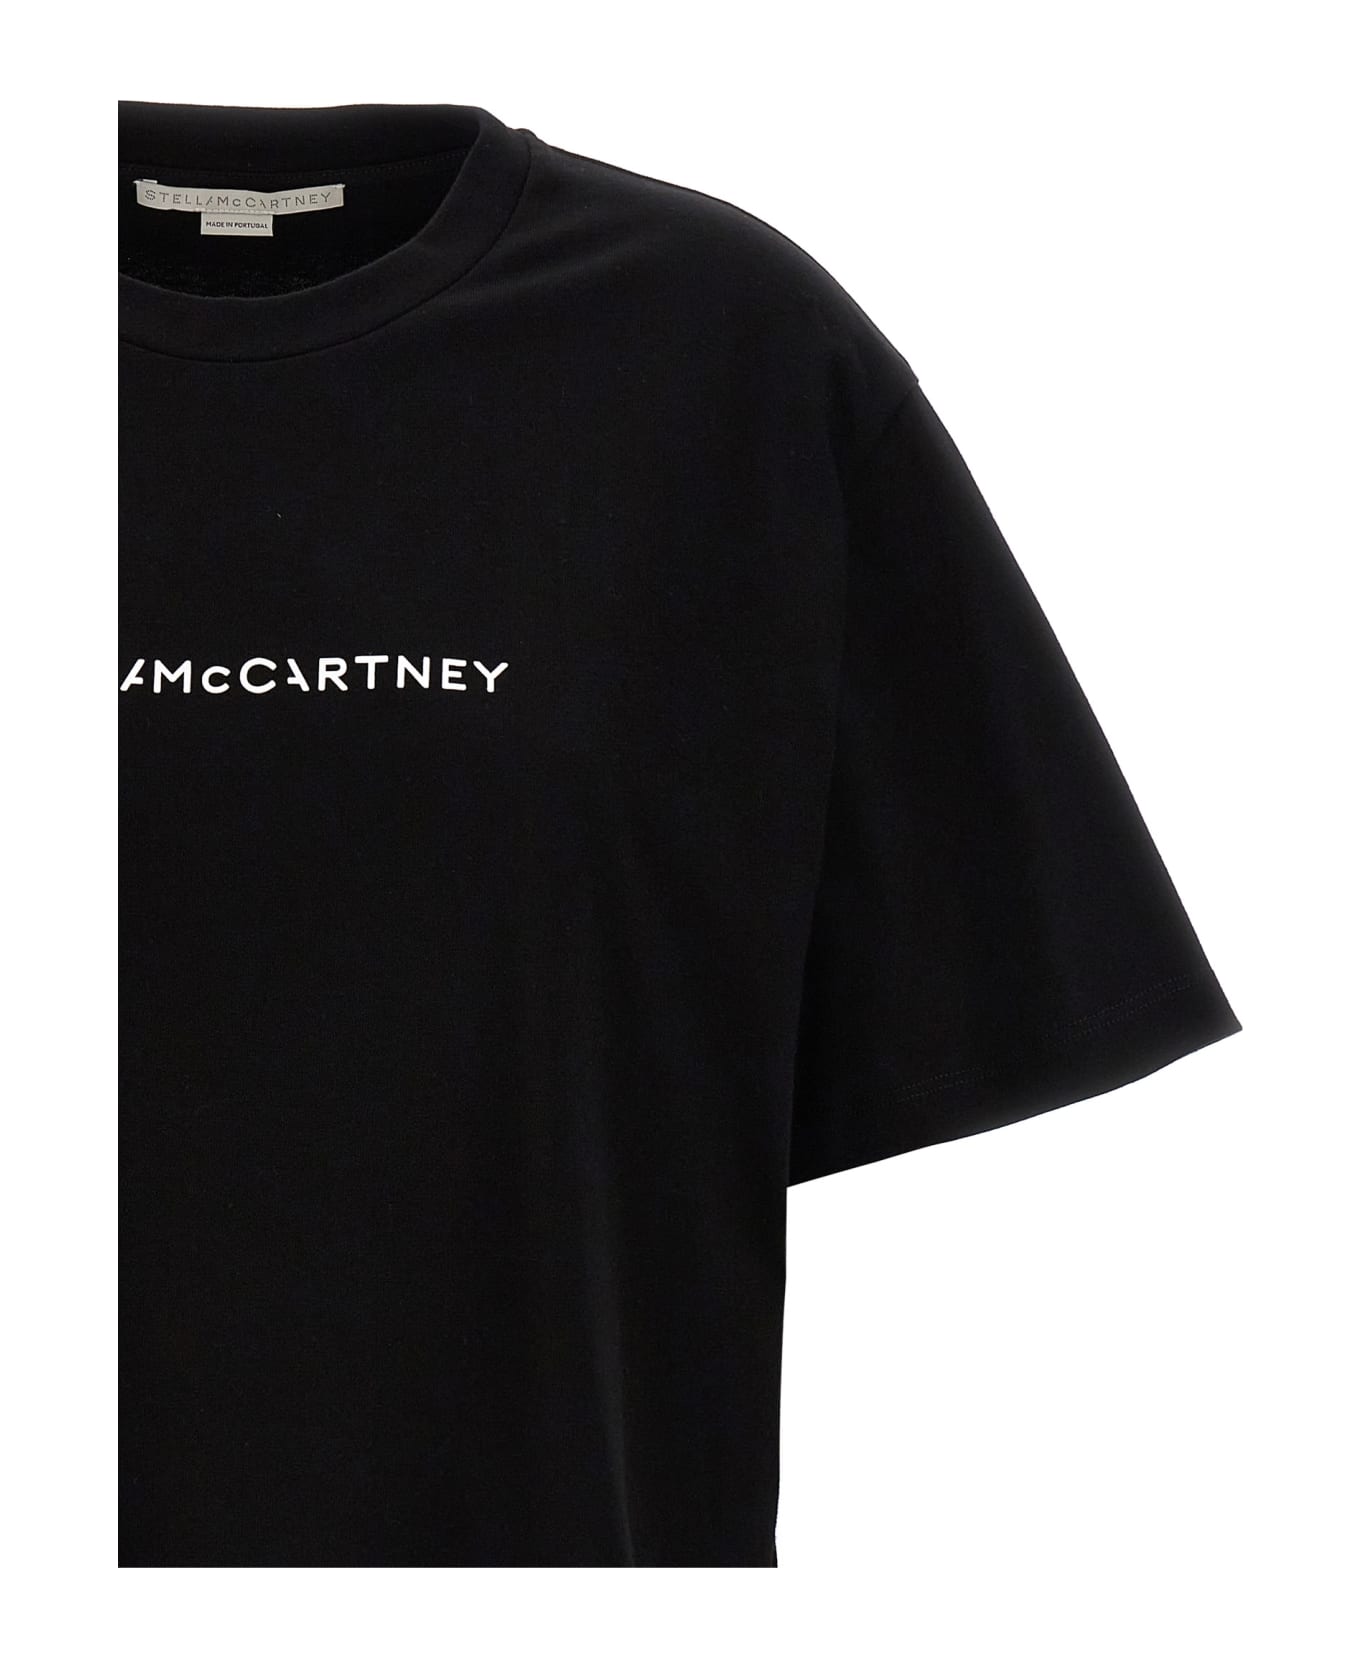 Stella McCartney 'iconic' T-shirt - Black